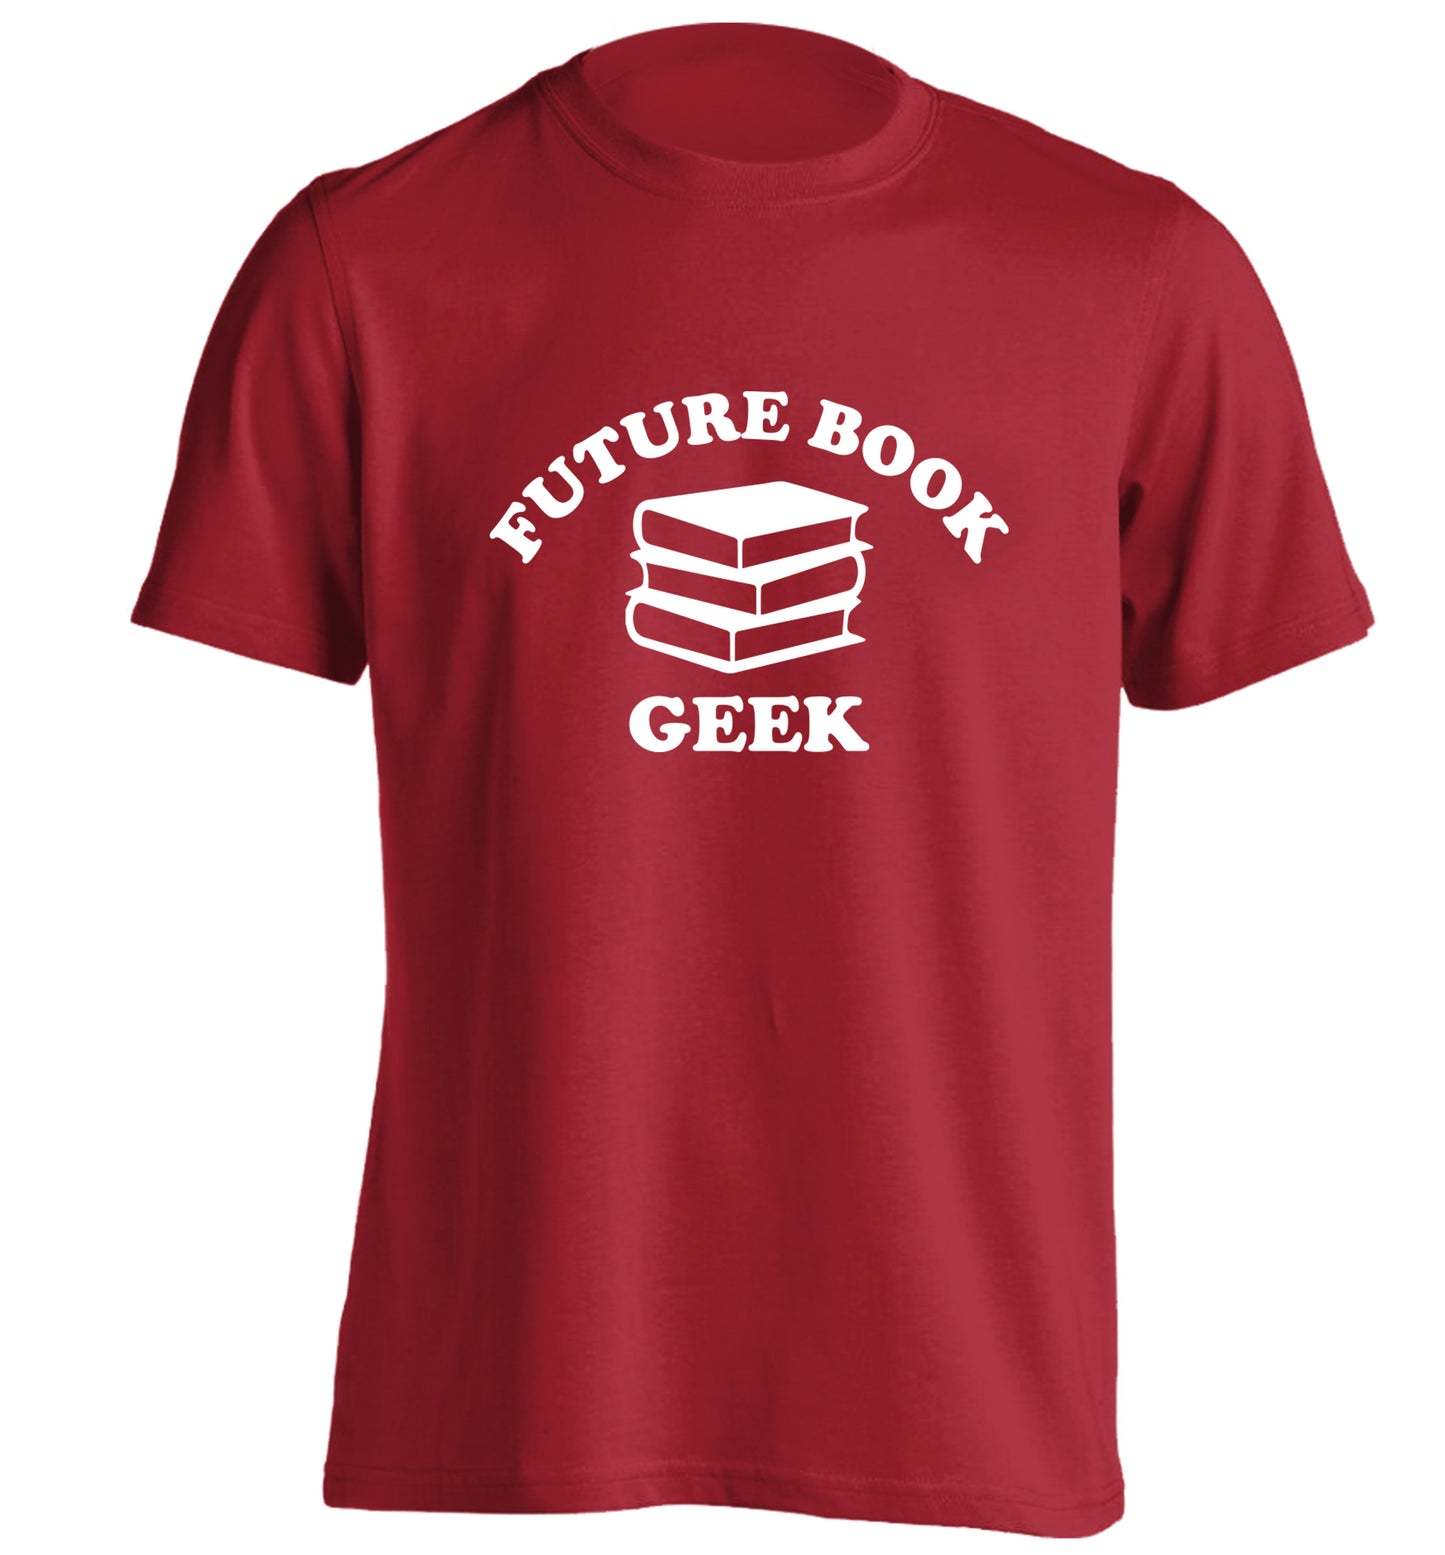 Future book geek adults unisex red Tshirt 2XL